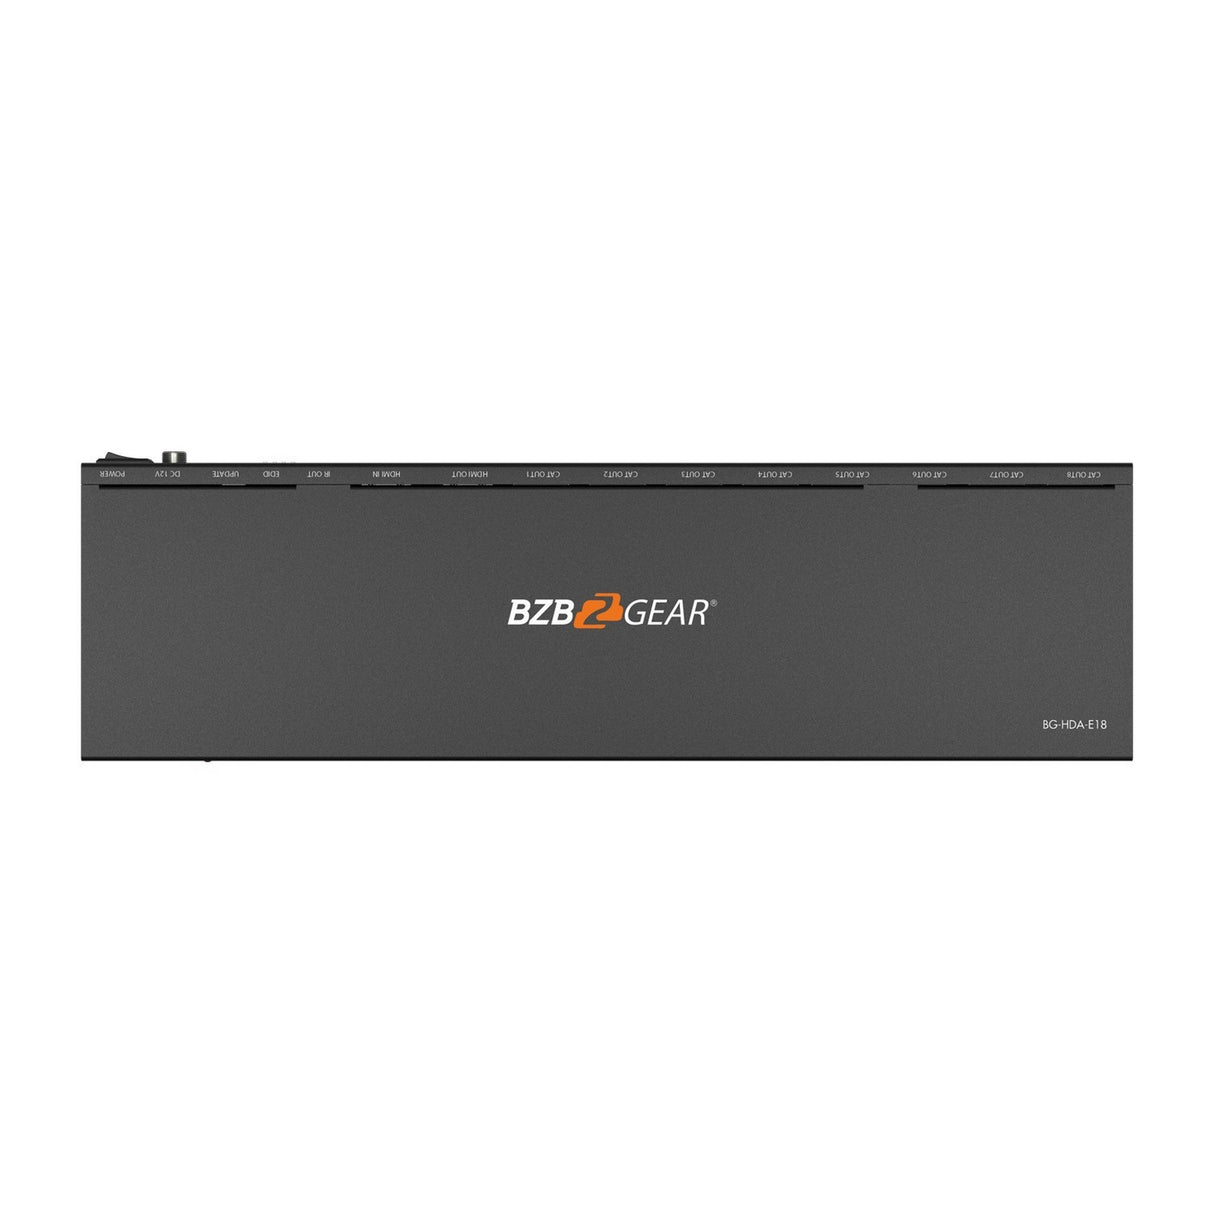 BZBGEAR BG-HDA-E18 1X8 1080P/4K30 HDMI Splitter/Distribution Amplifier